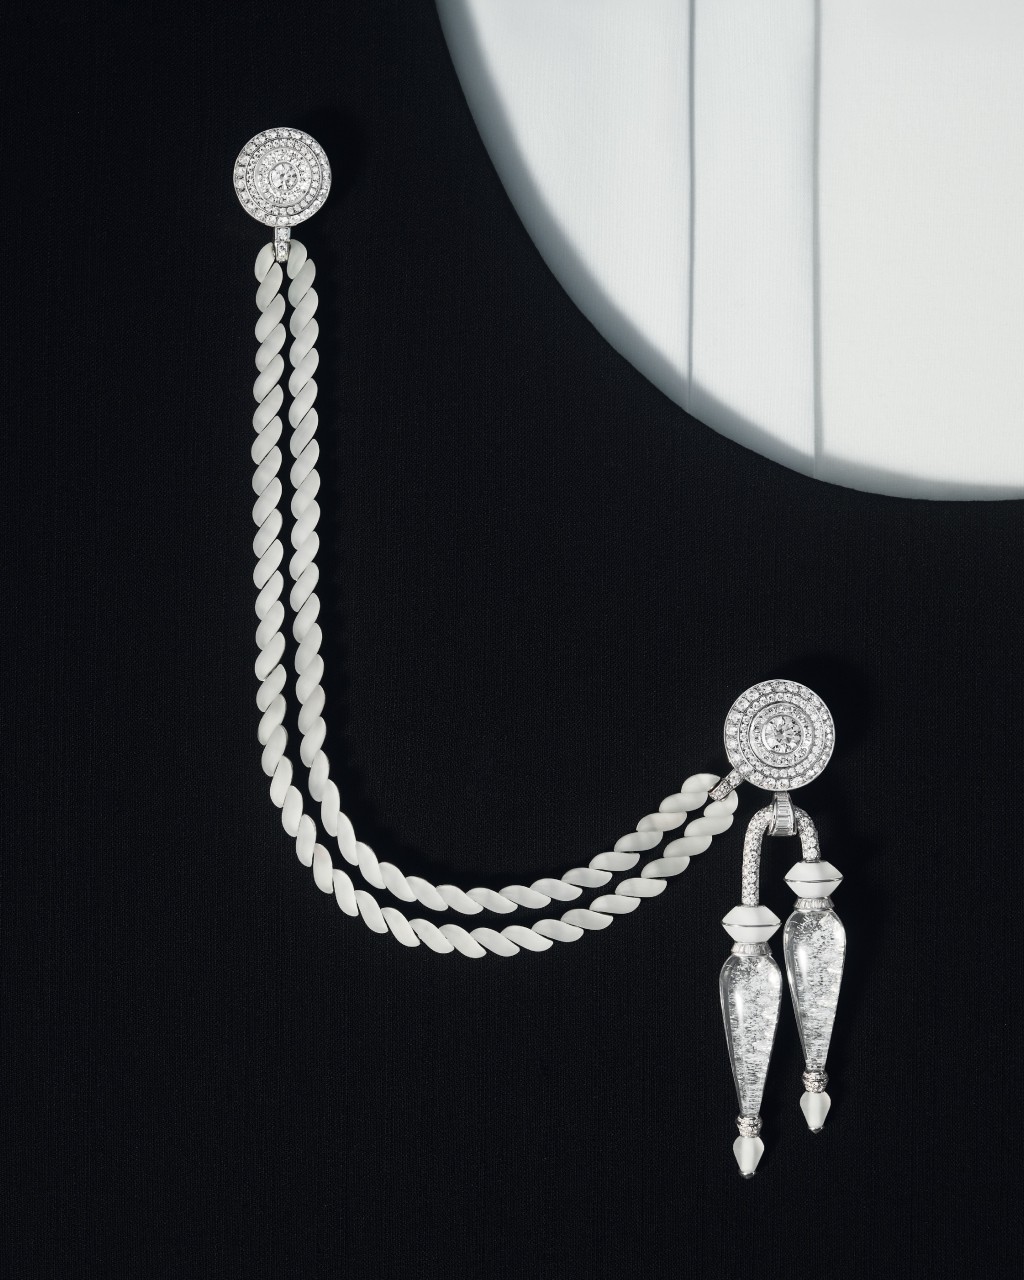 Aiguillette织绳穗饰，以白金、水晶和钻石交织而成，镶嵌一颗重2.11卡圆形钻石，佩戴方式多变，可拆分成两枚胸针及一条磨砂水晶手链。